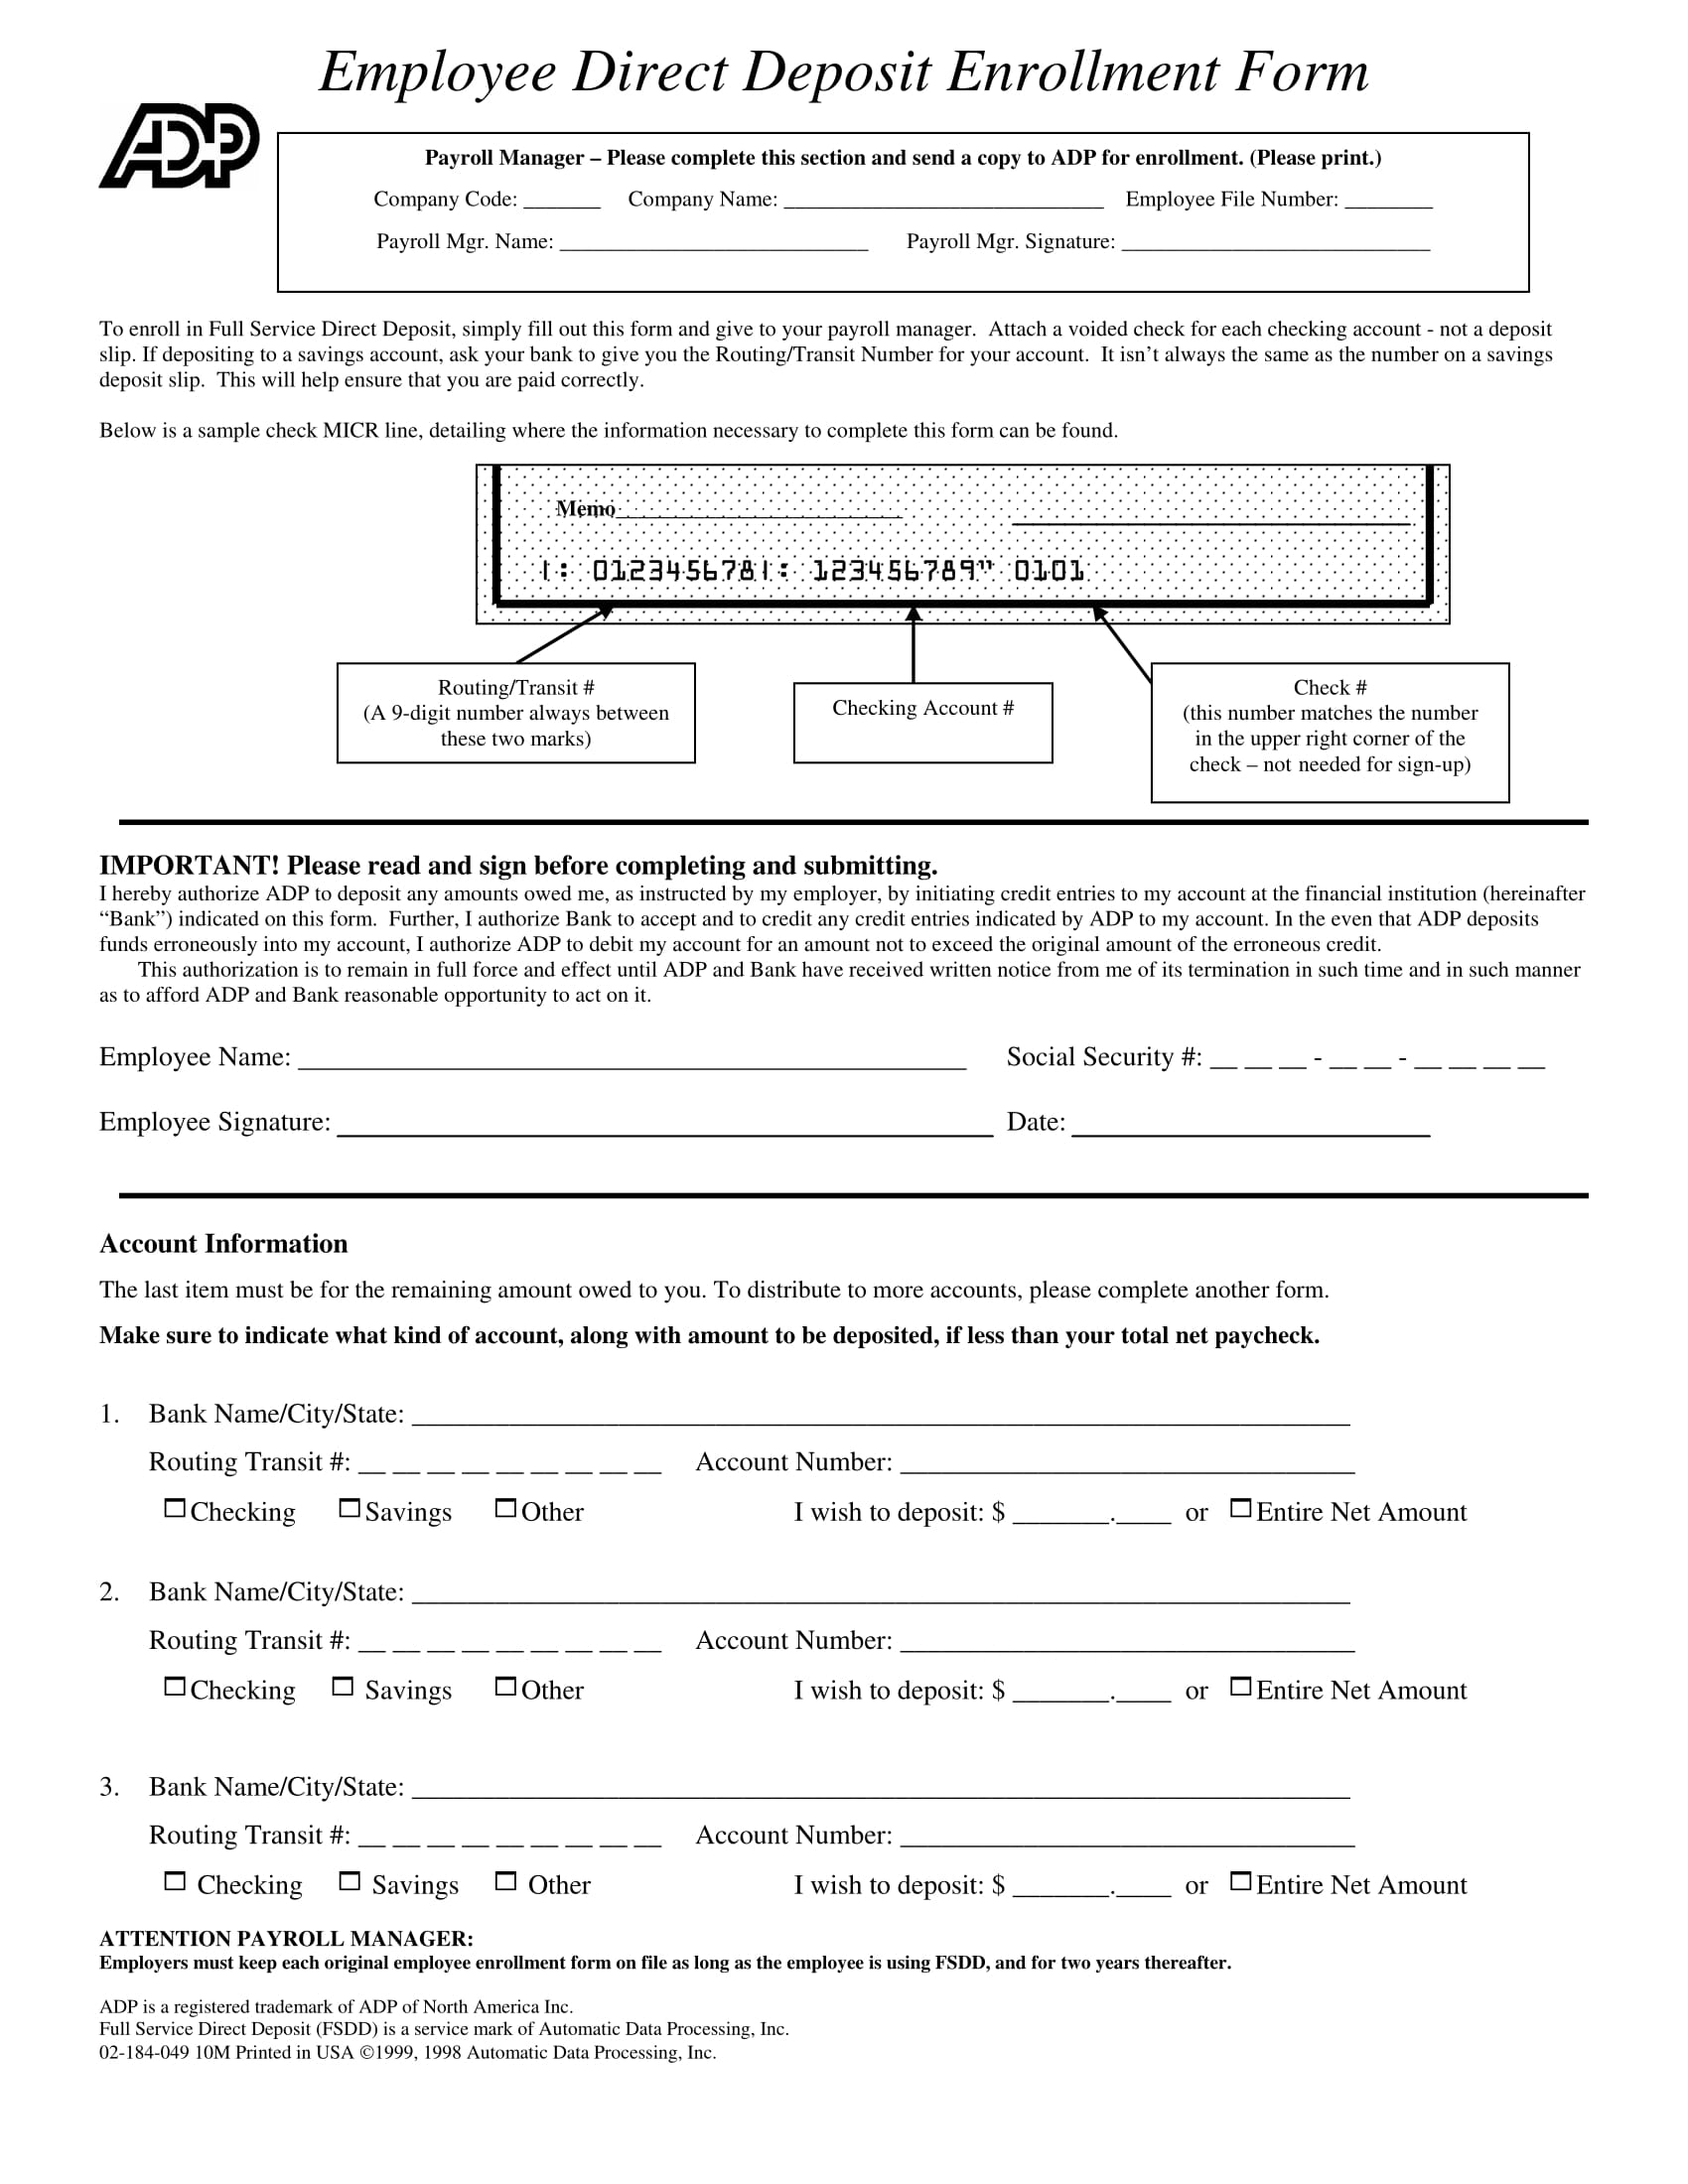 employee direct deposit enrollment form 1